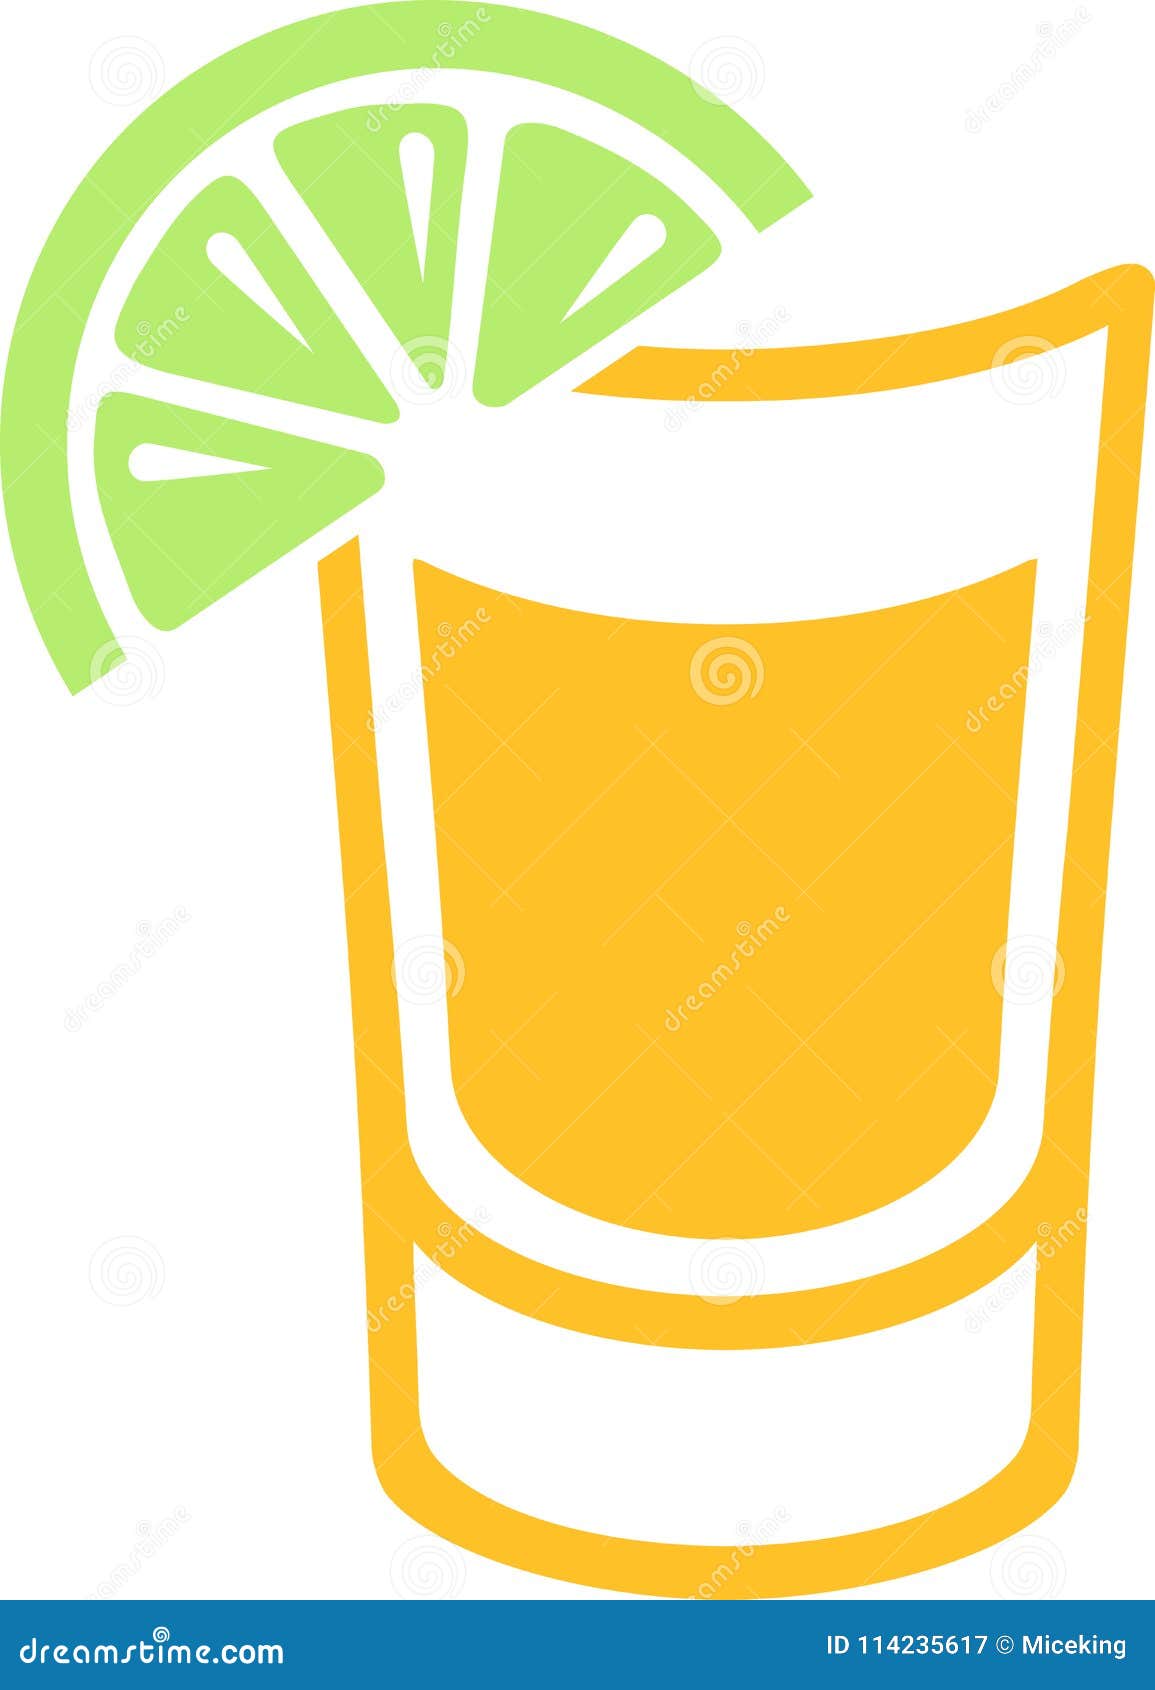 Tequila shot icon stock vector. Illustration of lemon - 114235617